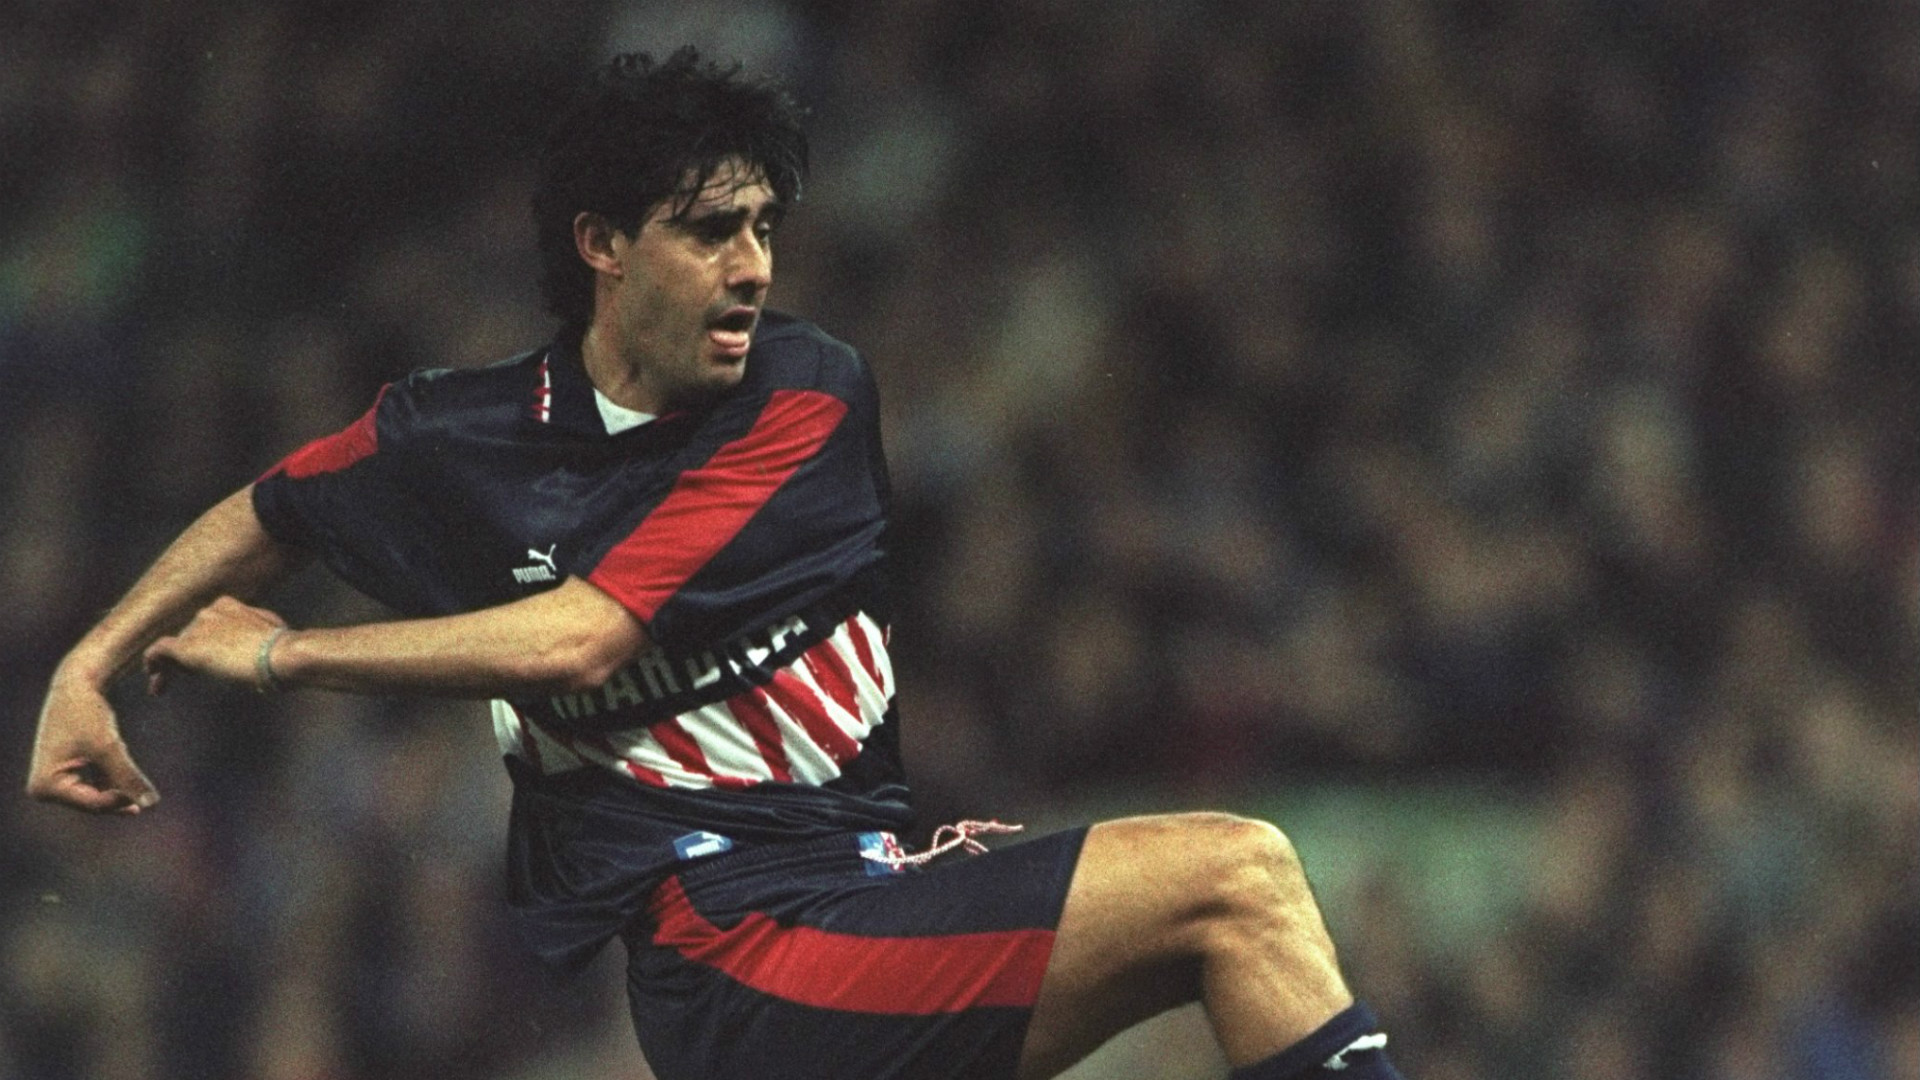 José Luis Pérez Caminero (1993-1998) Jose-perez-caminero-atletico_8az2kylgj4ra1qg5faalowcj3